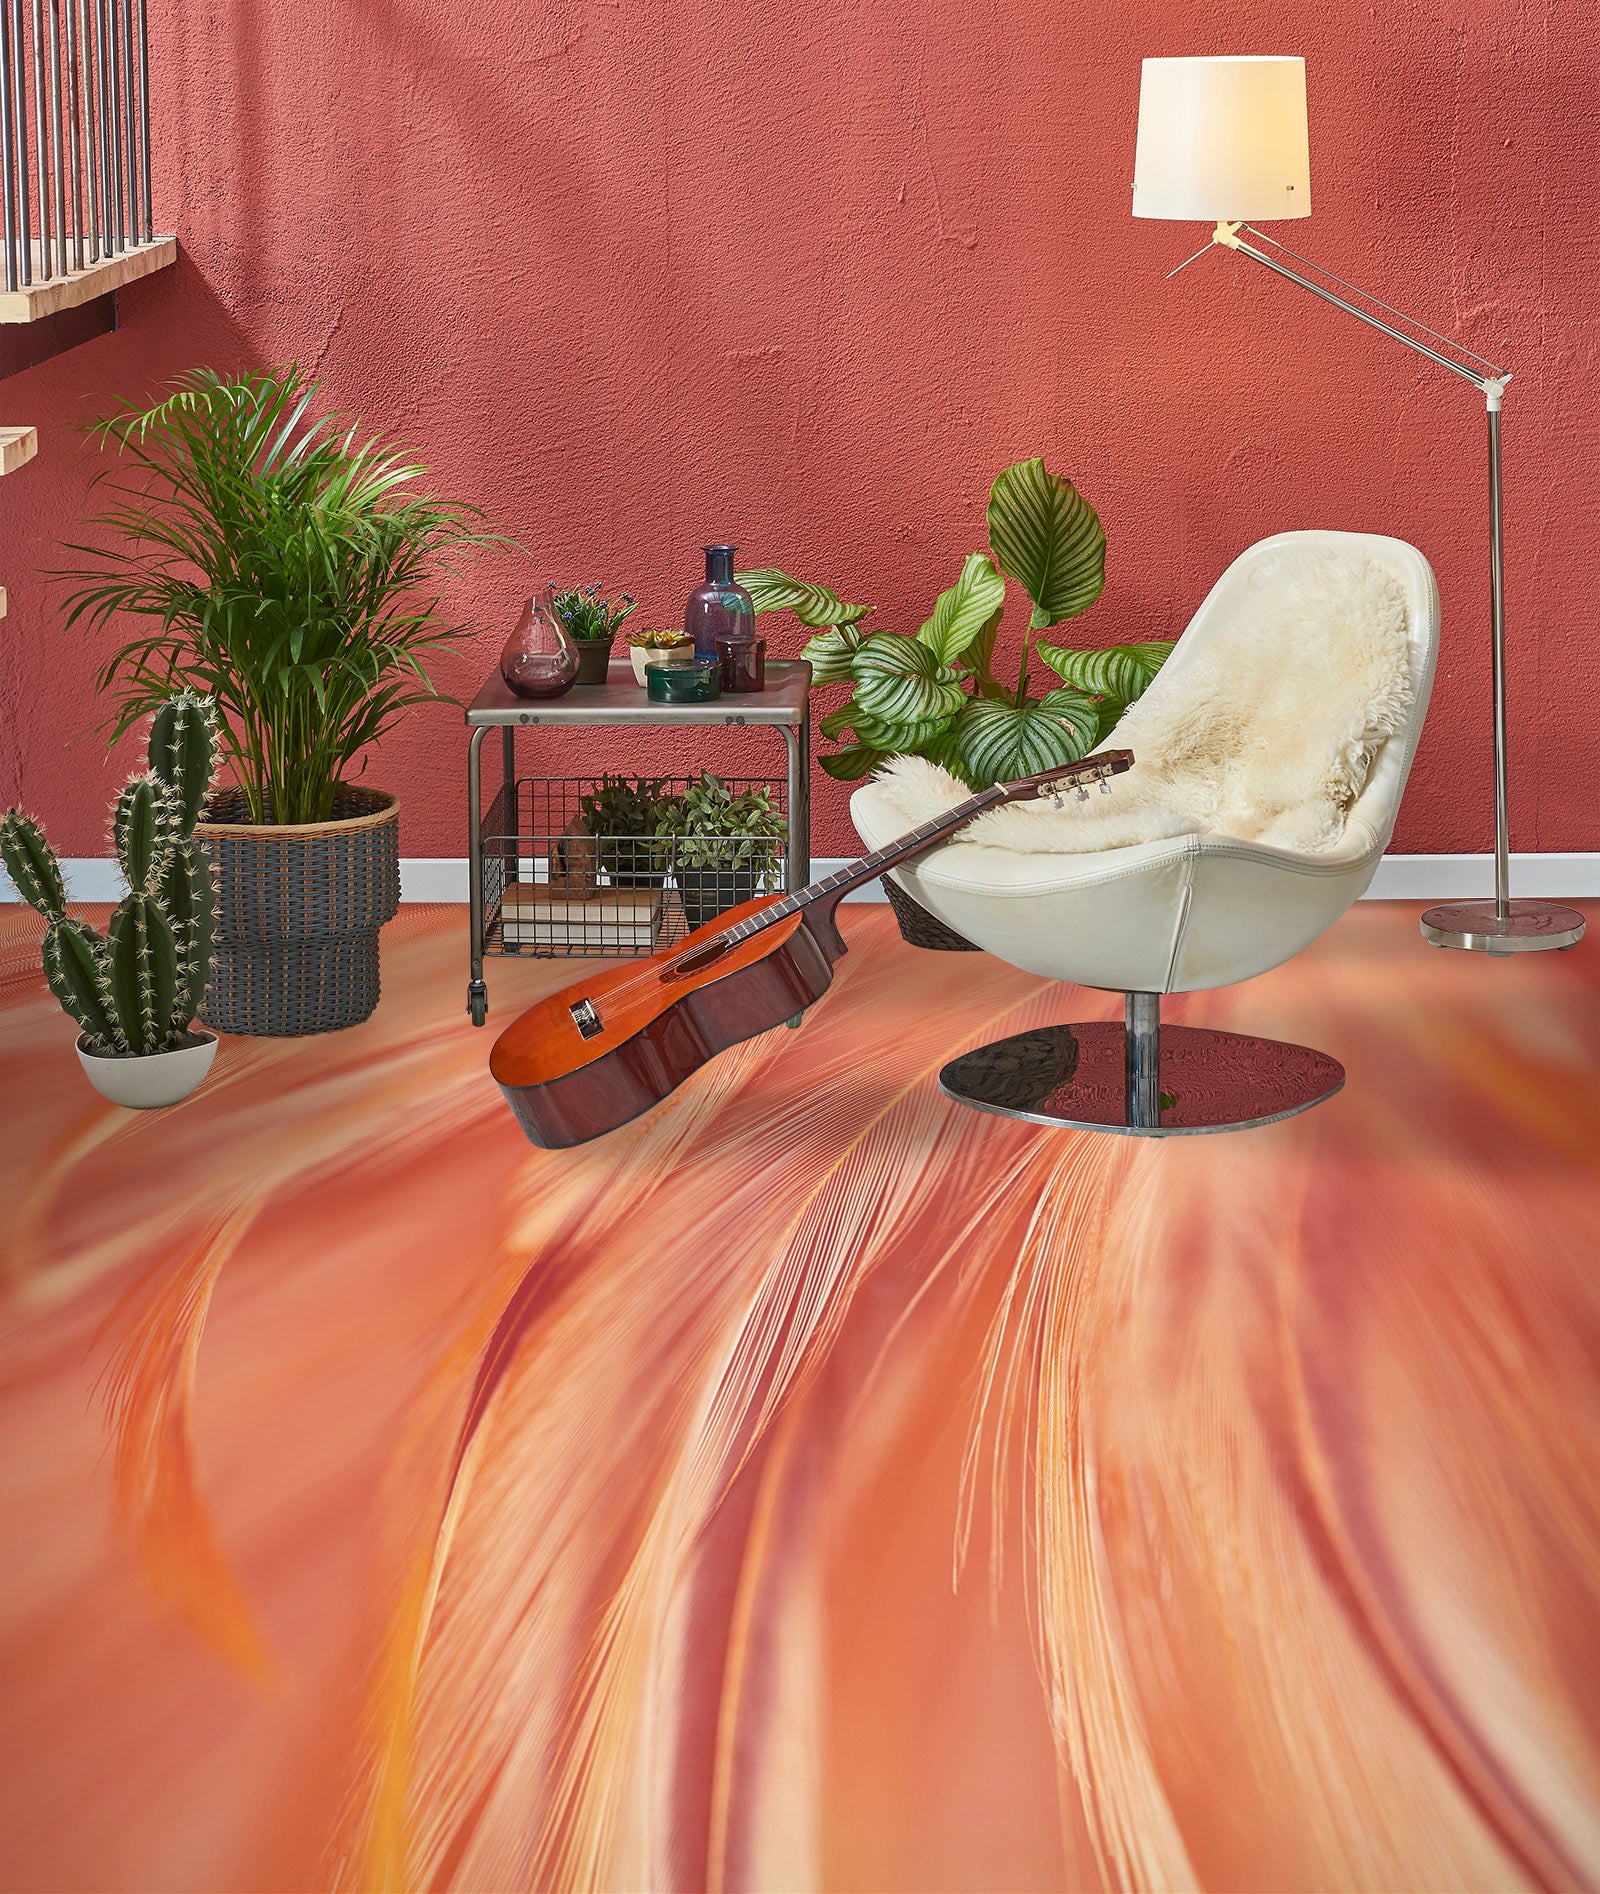 3D Orange Feathers 1144 Floor Mural  Wallpaper Murals Self-Adhesive Removable Print Epoxy